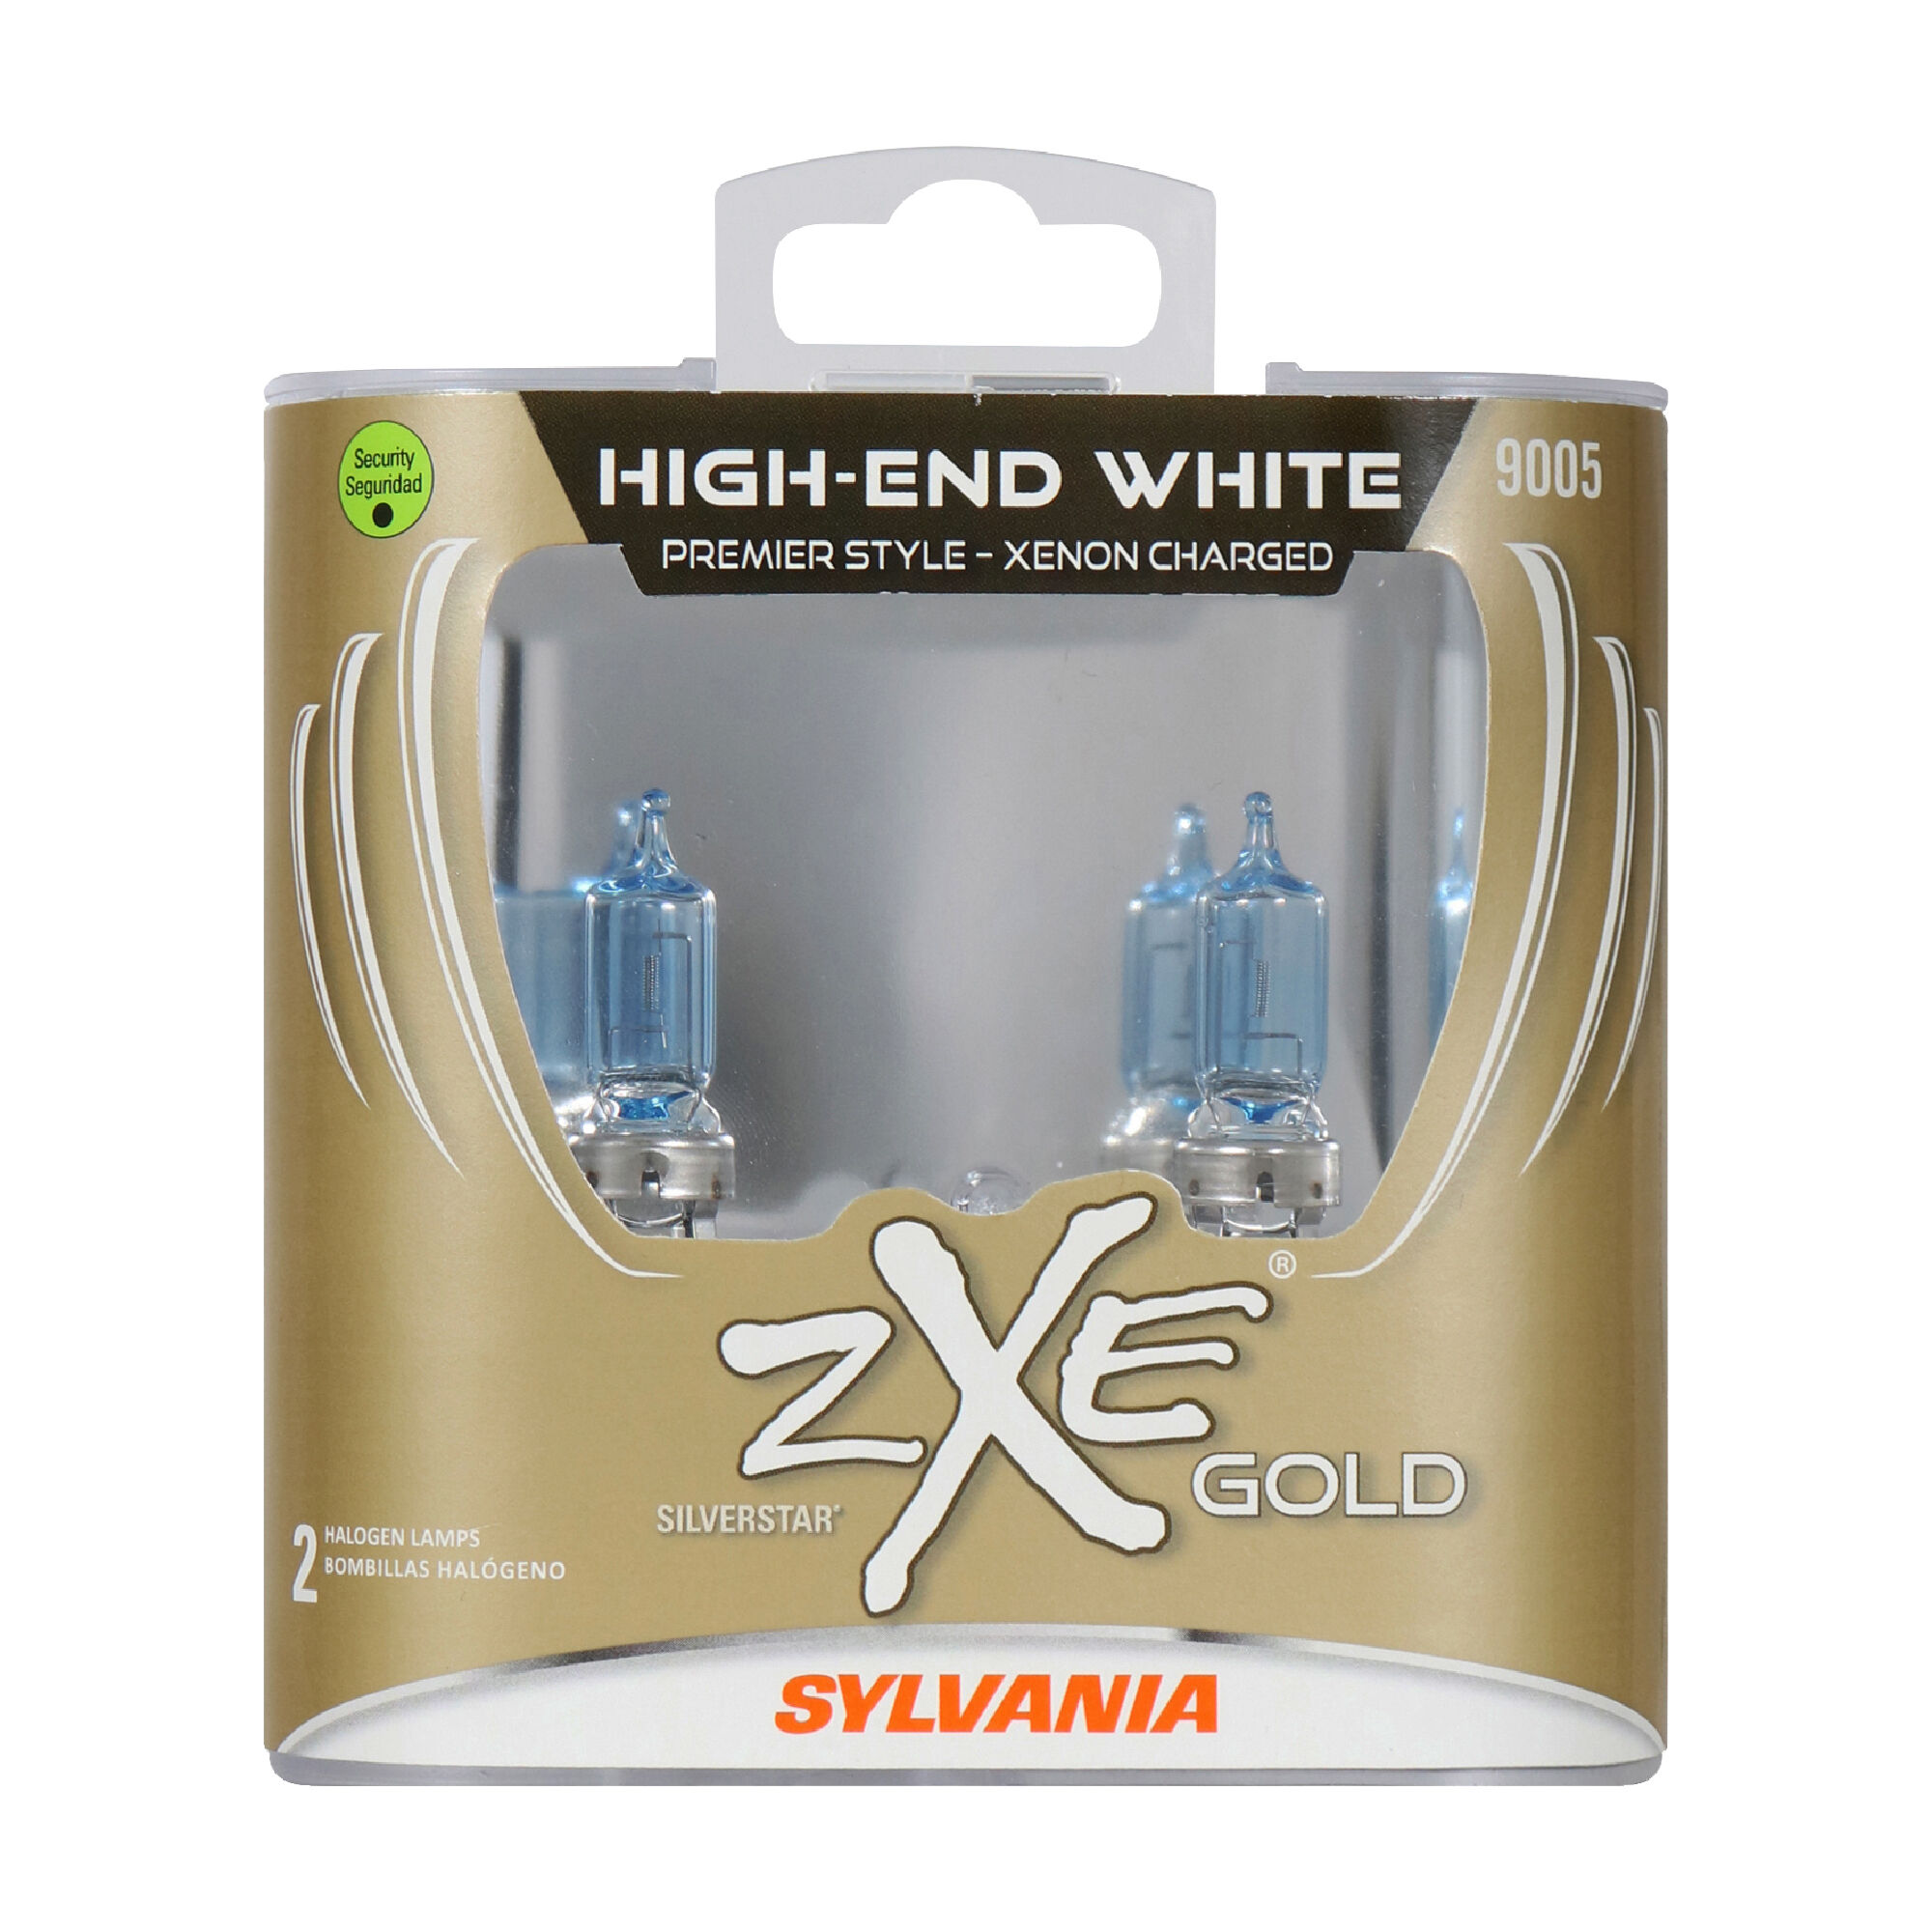 SYLVANIA 9005 SilverStar zXe Gold Halogen Headlight Bulb, 2 Pack